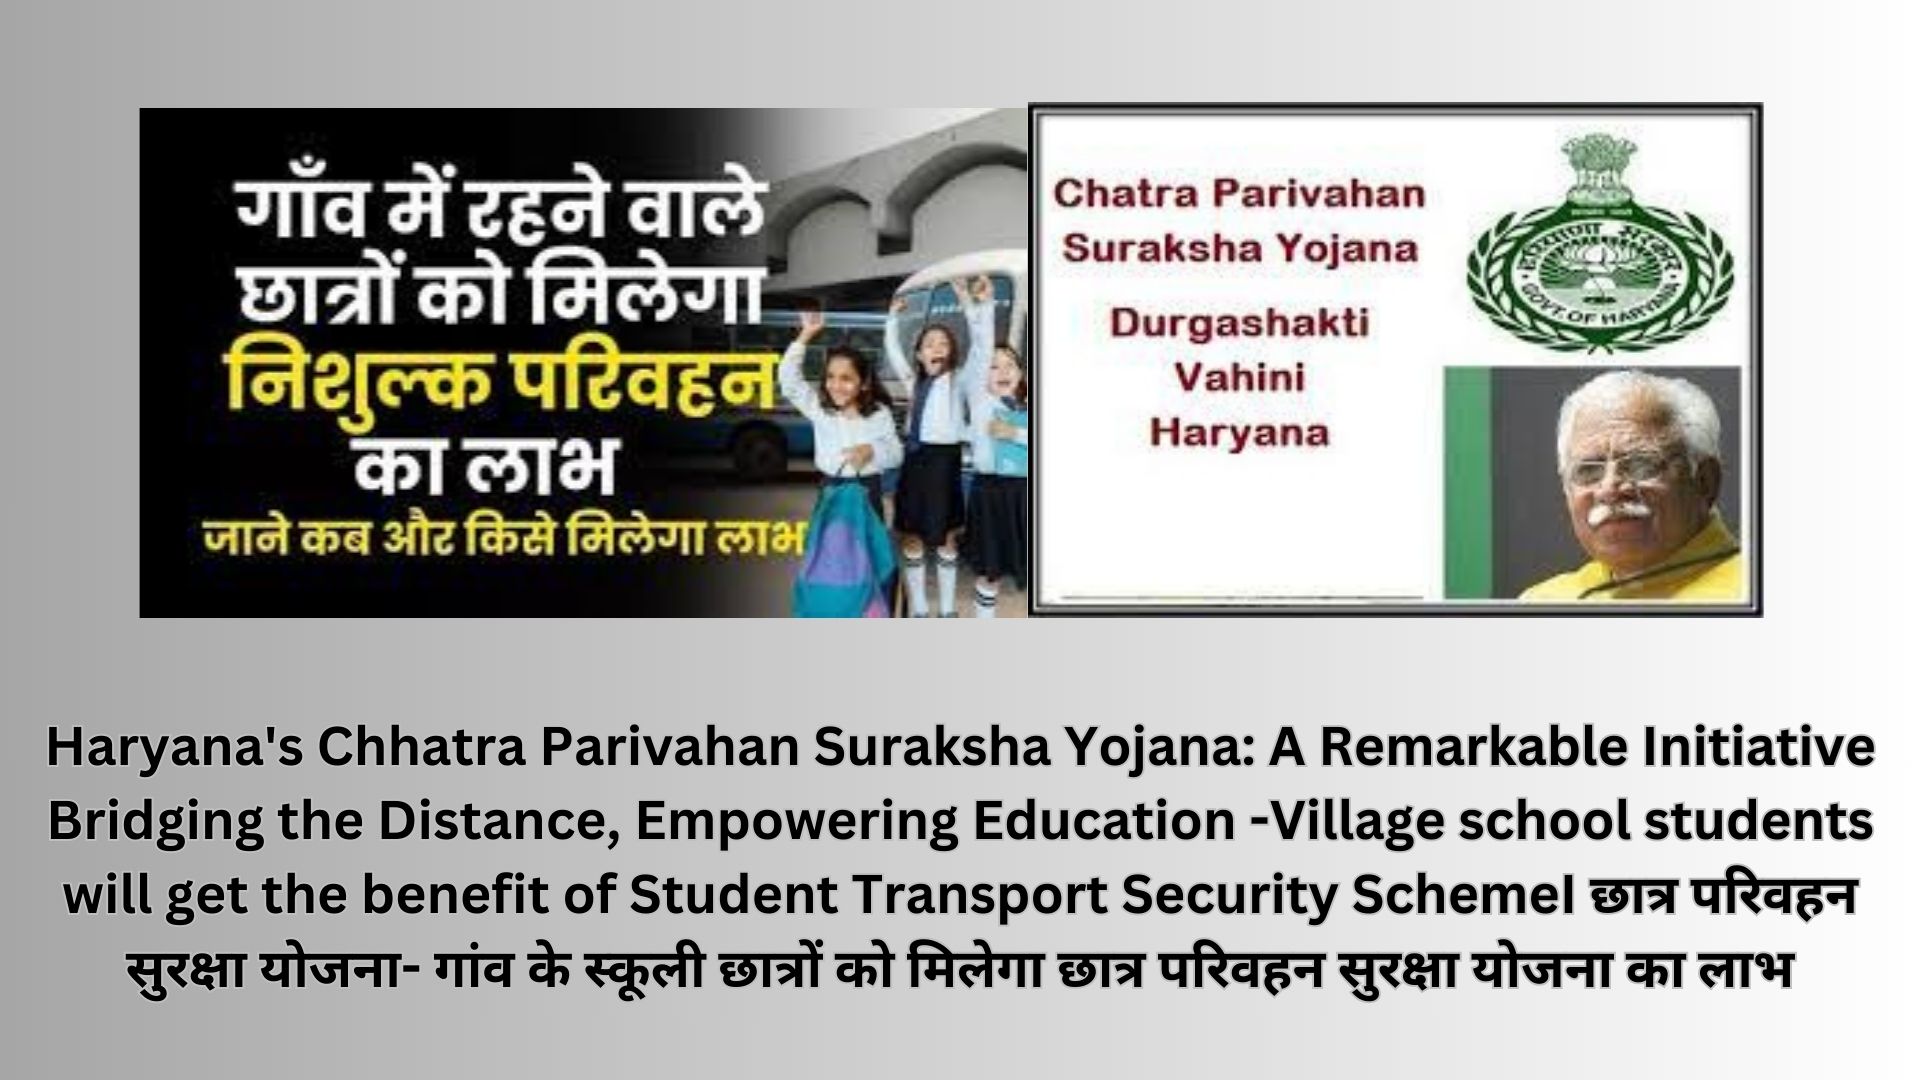 Haryana's Chhatra Parivahan Suraksha Yojana: A Remarkable Initiative Bridging the Distance, Empowering Education -Village school students will get the benefit of Student Transport Security SchemeI छात्र परिवहन सुरक्षा योजना- गांव के स्कूली छात्रों को मिलेगा छात्र परिवहन सुरक्षा योजना का लाभ